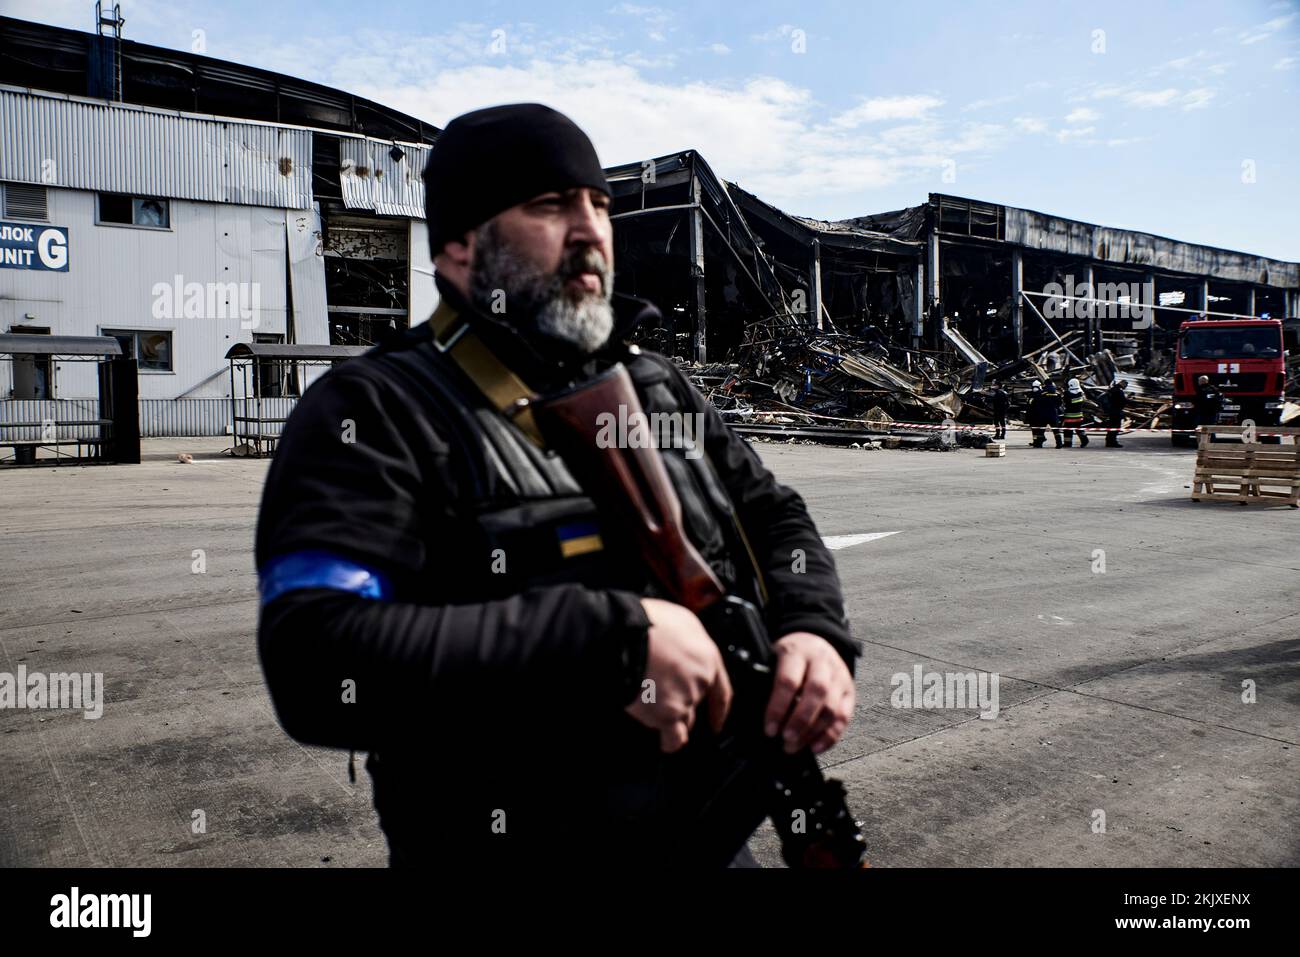 Antonin Burat / Le Pictorium -  War in Ukraine: David stands up to Goliath -  29/3/2022  -  Ukraine / Kyiv  -  A member of the Ukrainian security forc Stock Photo